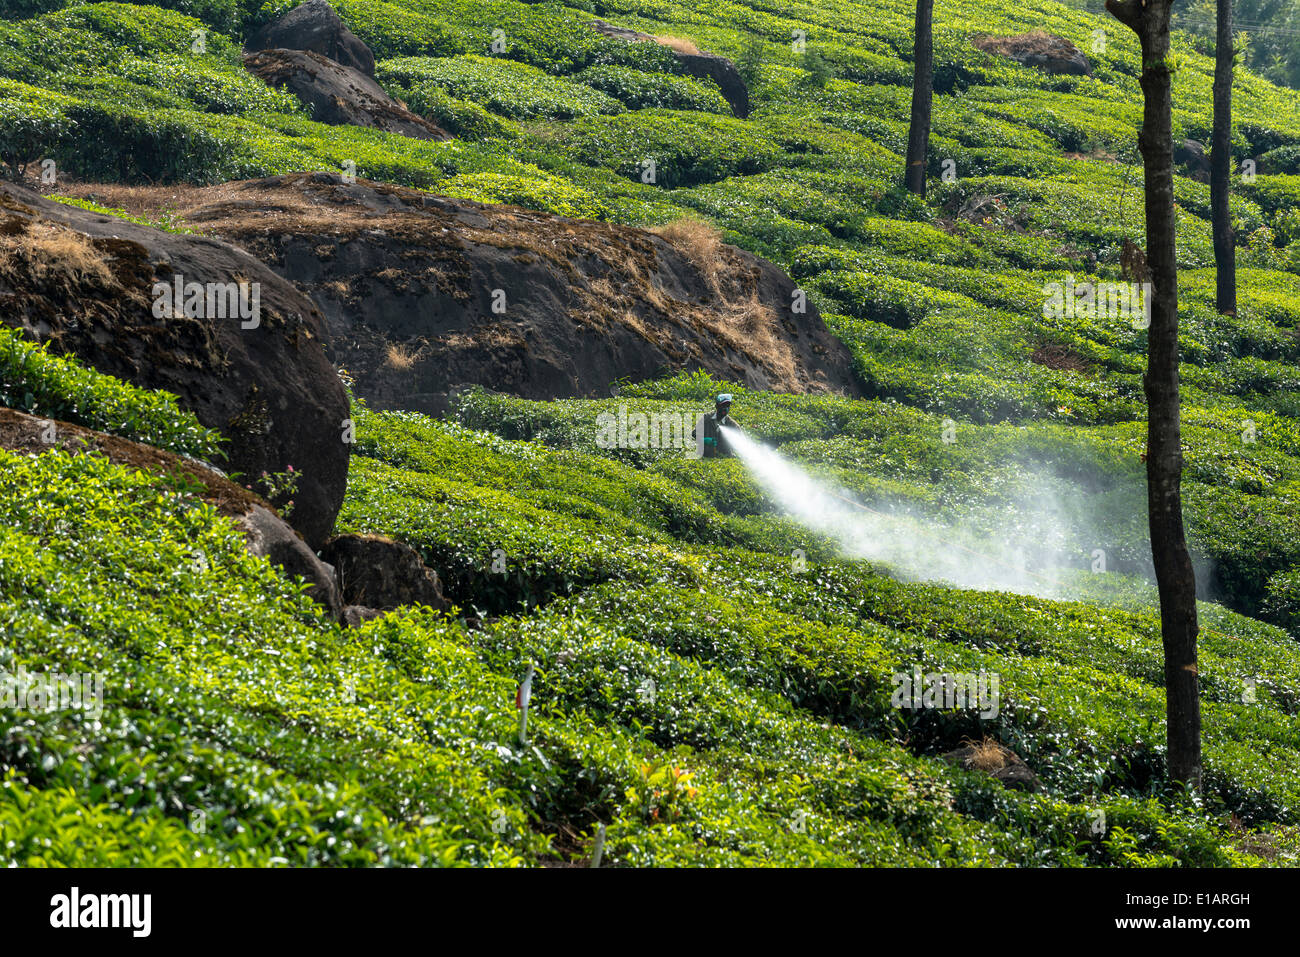 Worker spraying tea plants with pesticides, tea plantation, Munnar, Kerala, Western Ghats, India Stock Photo